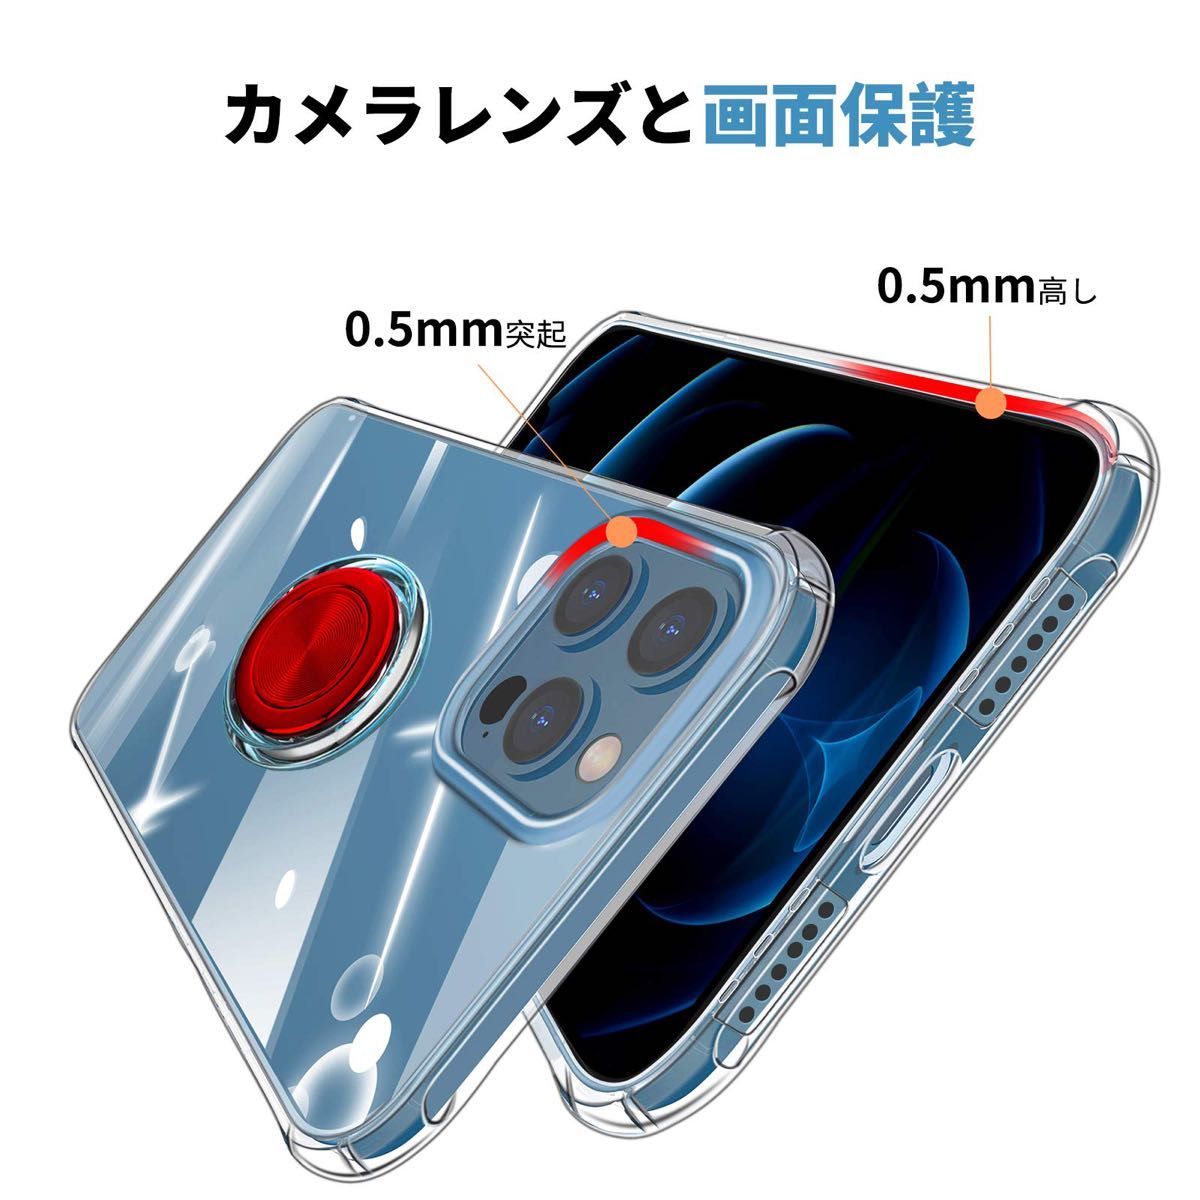 iPhone 12 Pro Max 用ケース クリア リング付 ソフト TPU 耐久 シリコン 米軍MIL規格 耐衝撃 カメラ保護